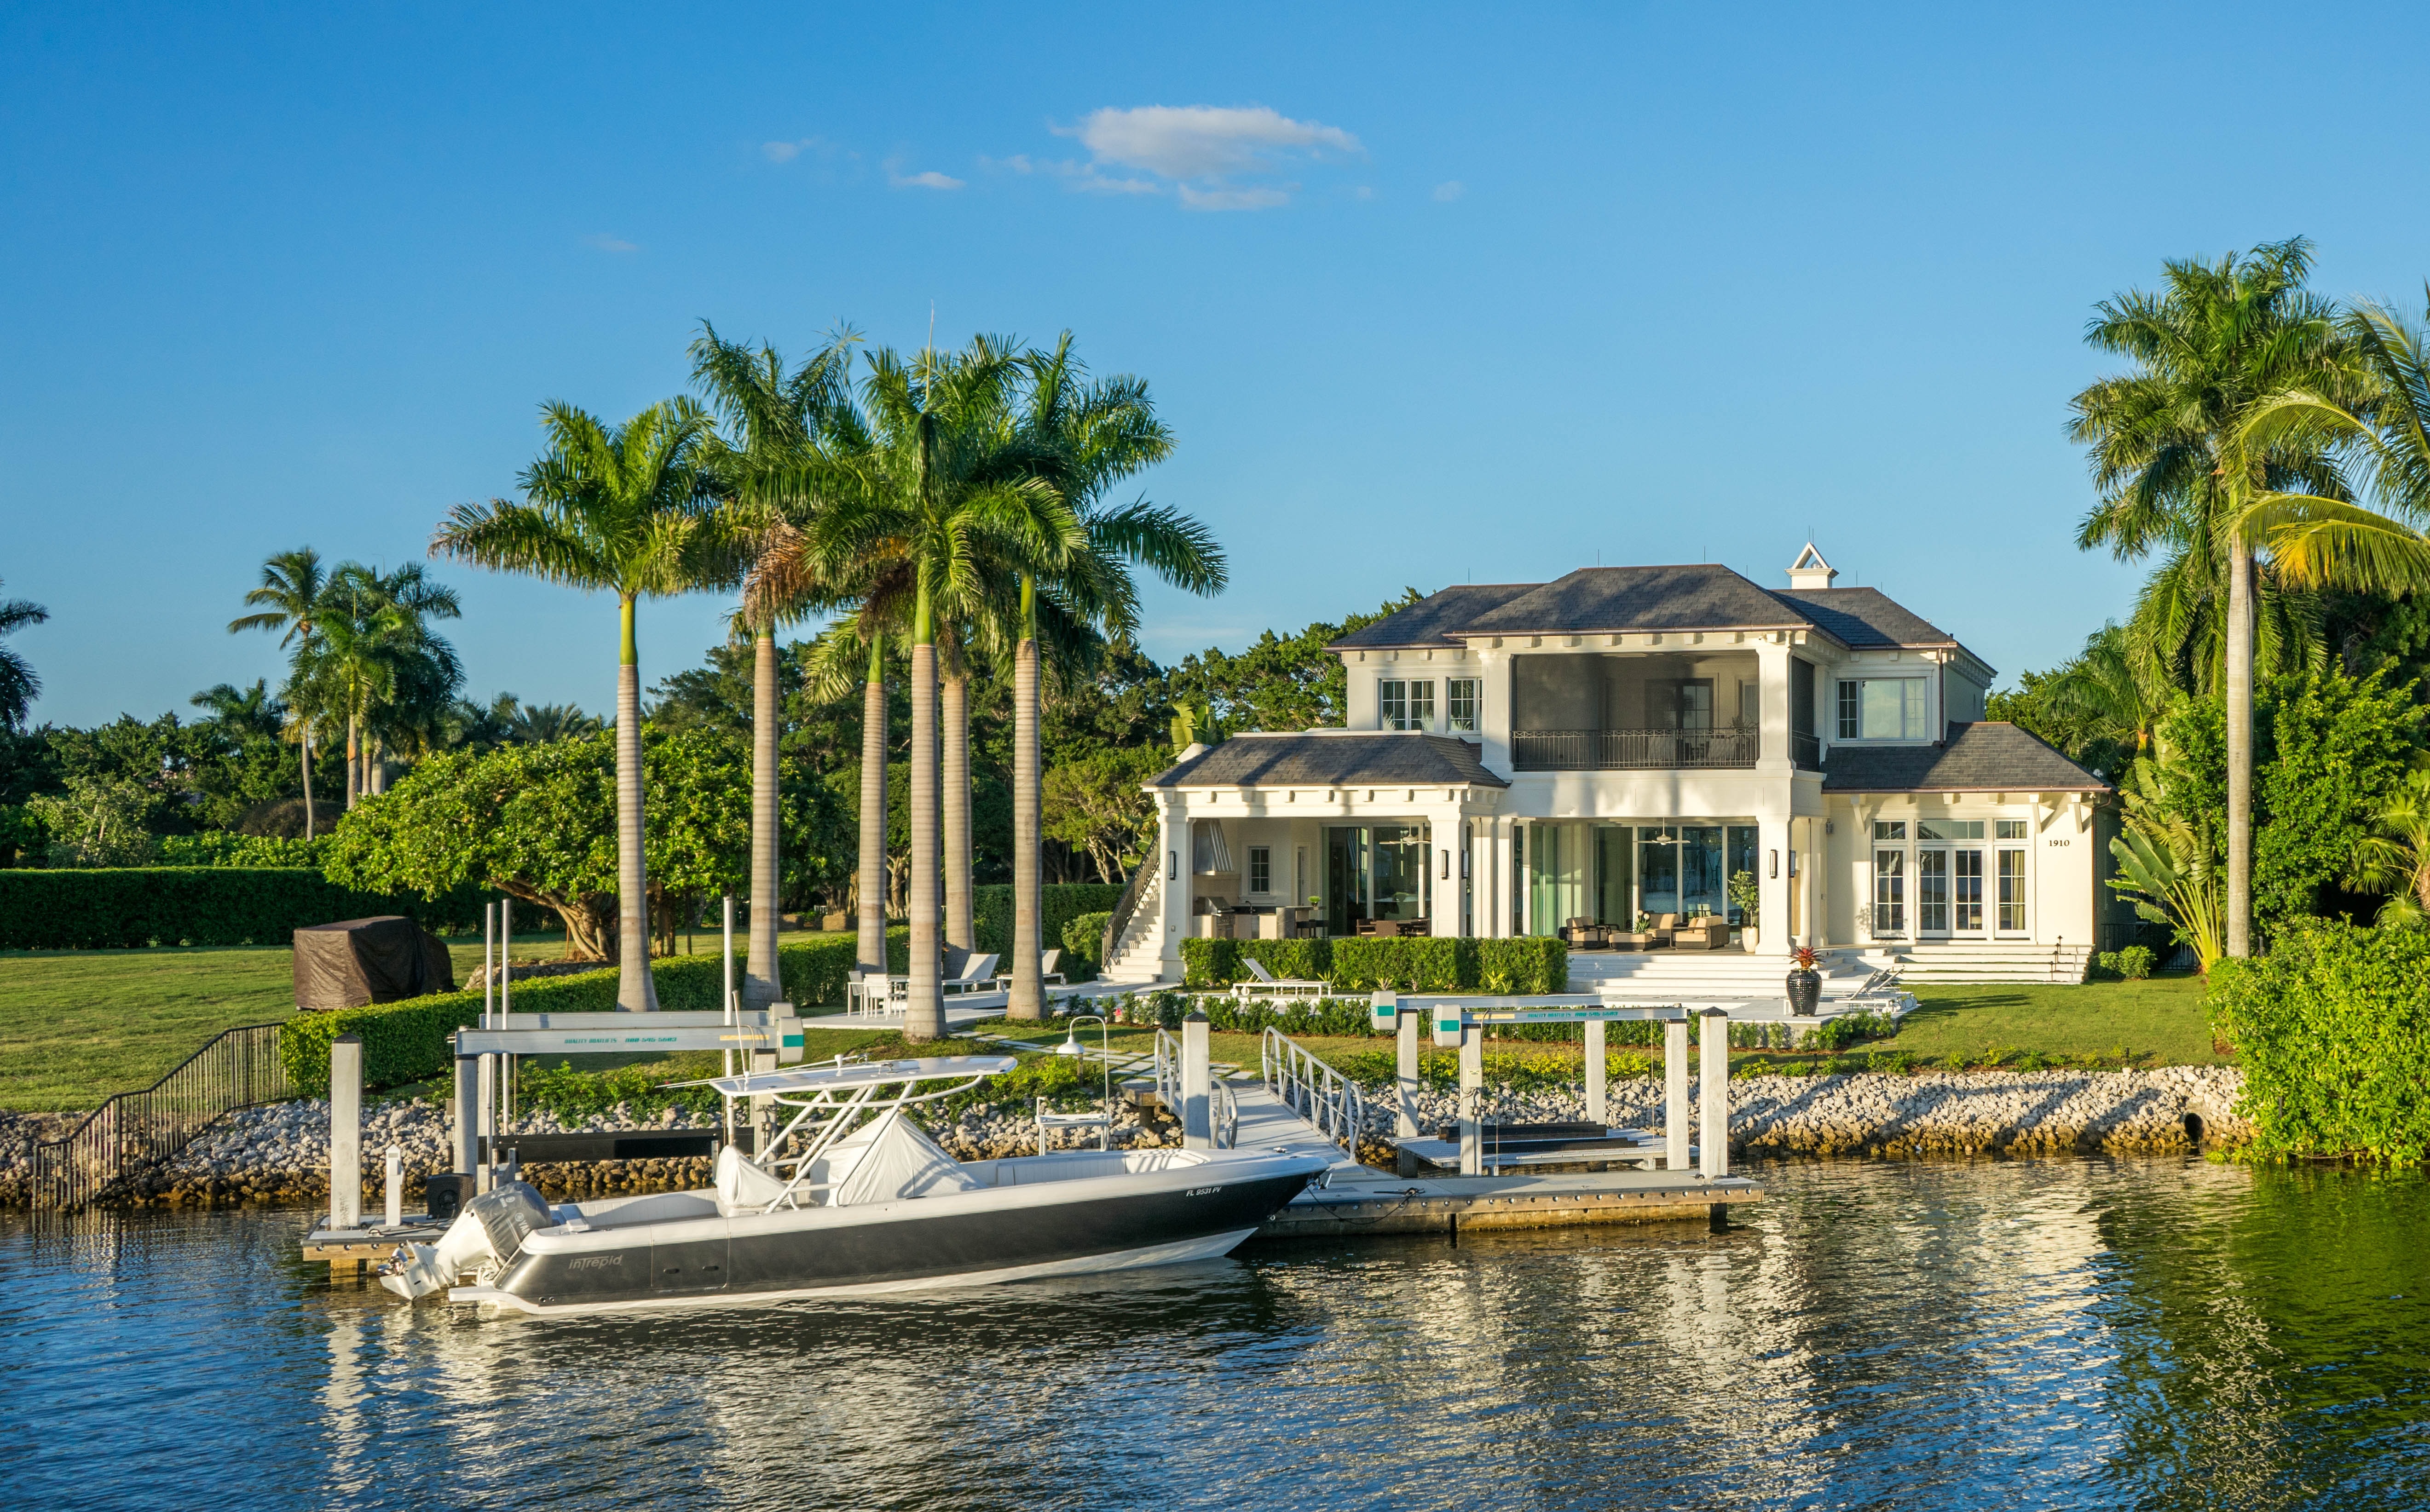 Florida, Boat, Coastline, Naples, Water, palm tree, luxury